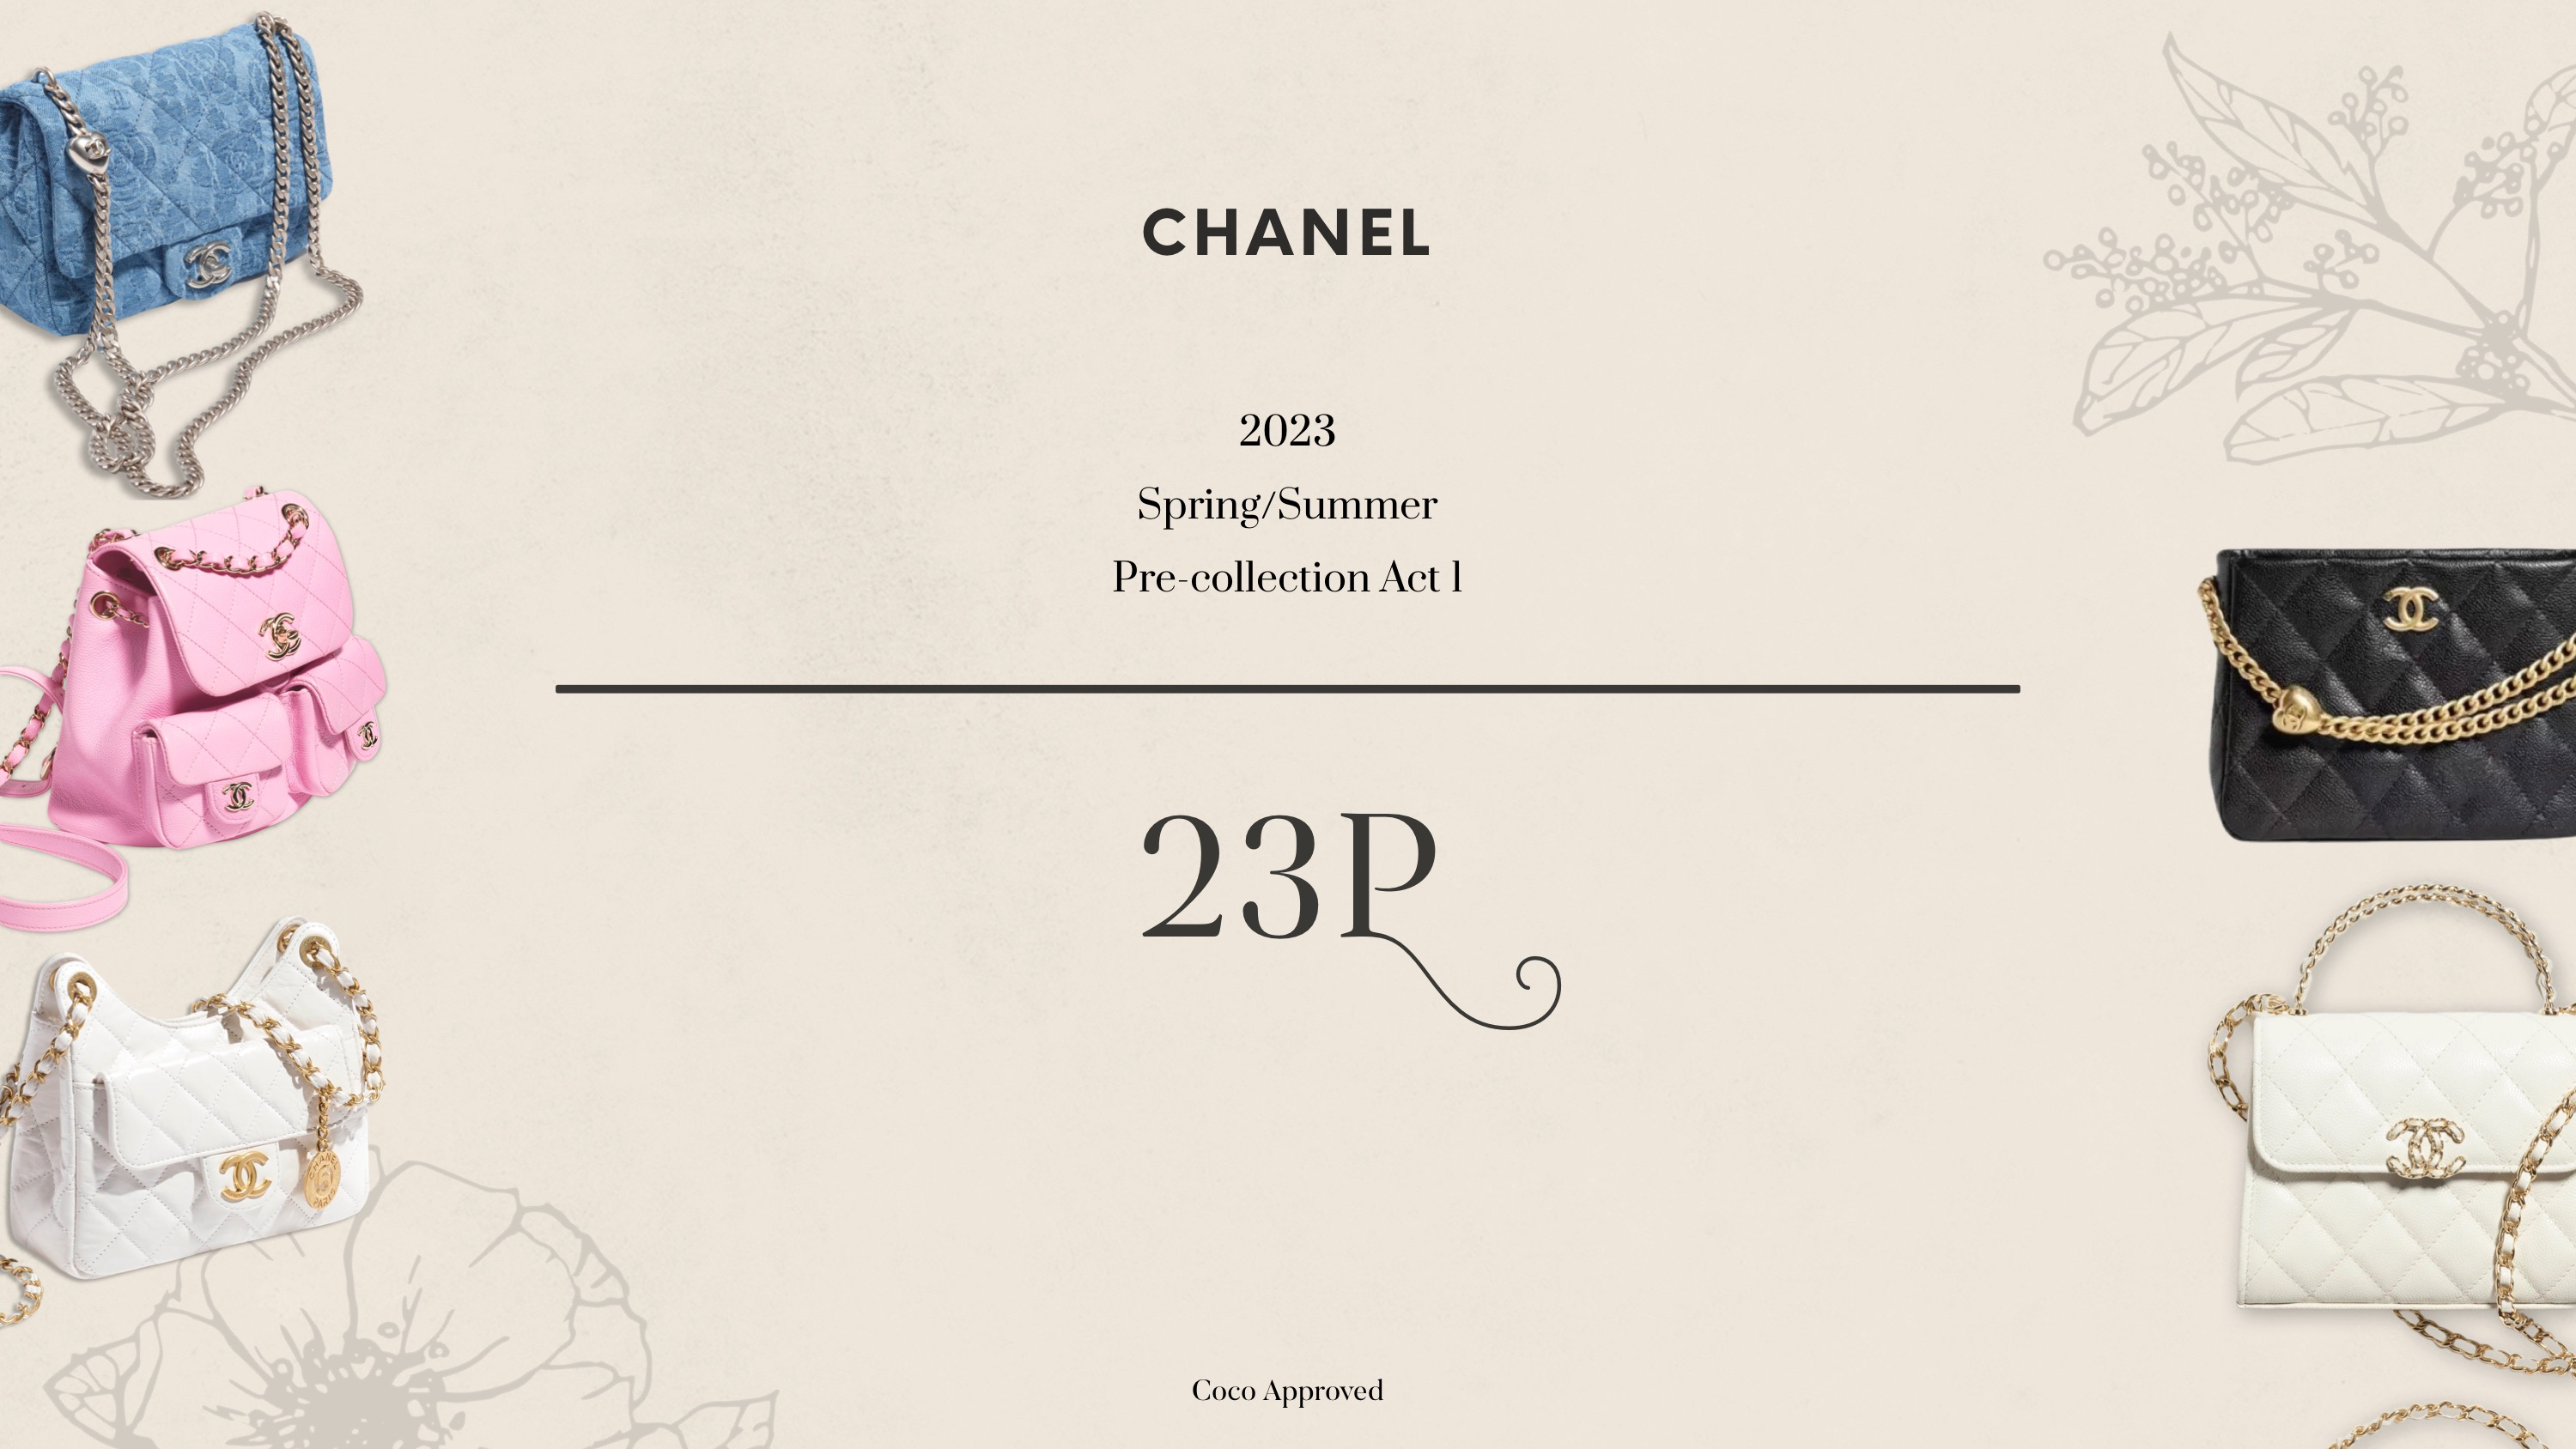 2023 Chanel Spring/Summer Pre-collection 23P Highlight – Coco